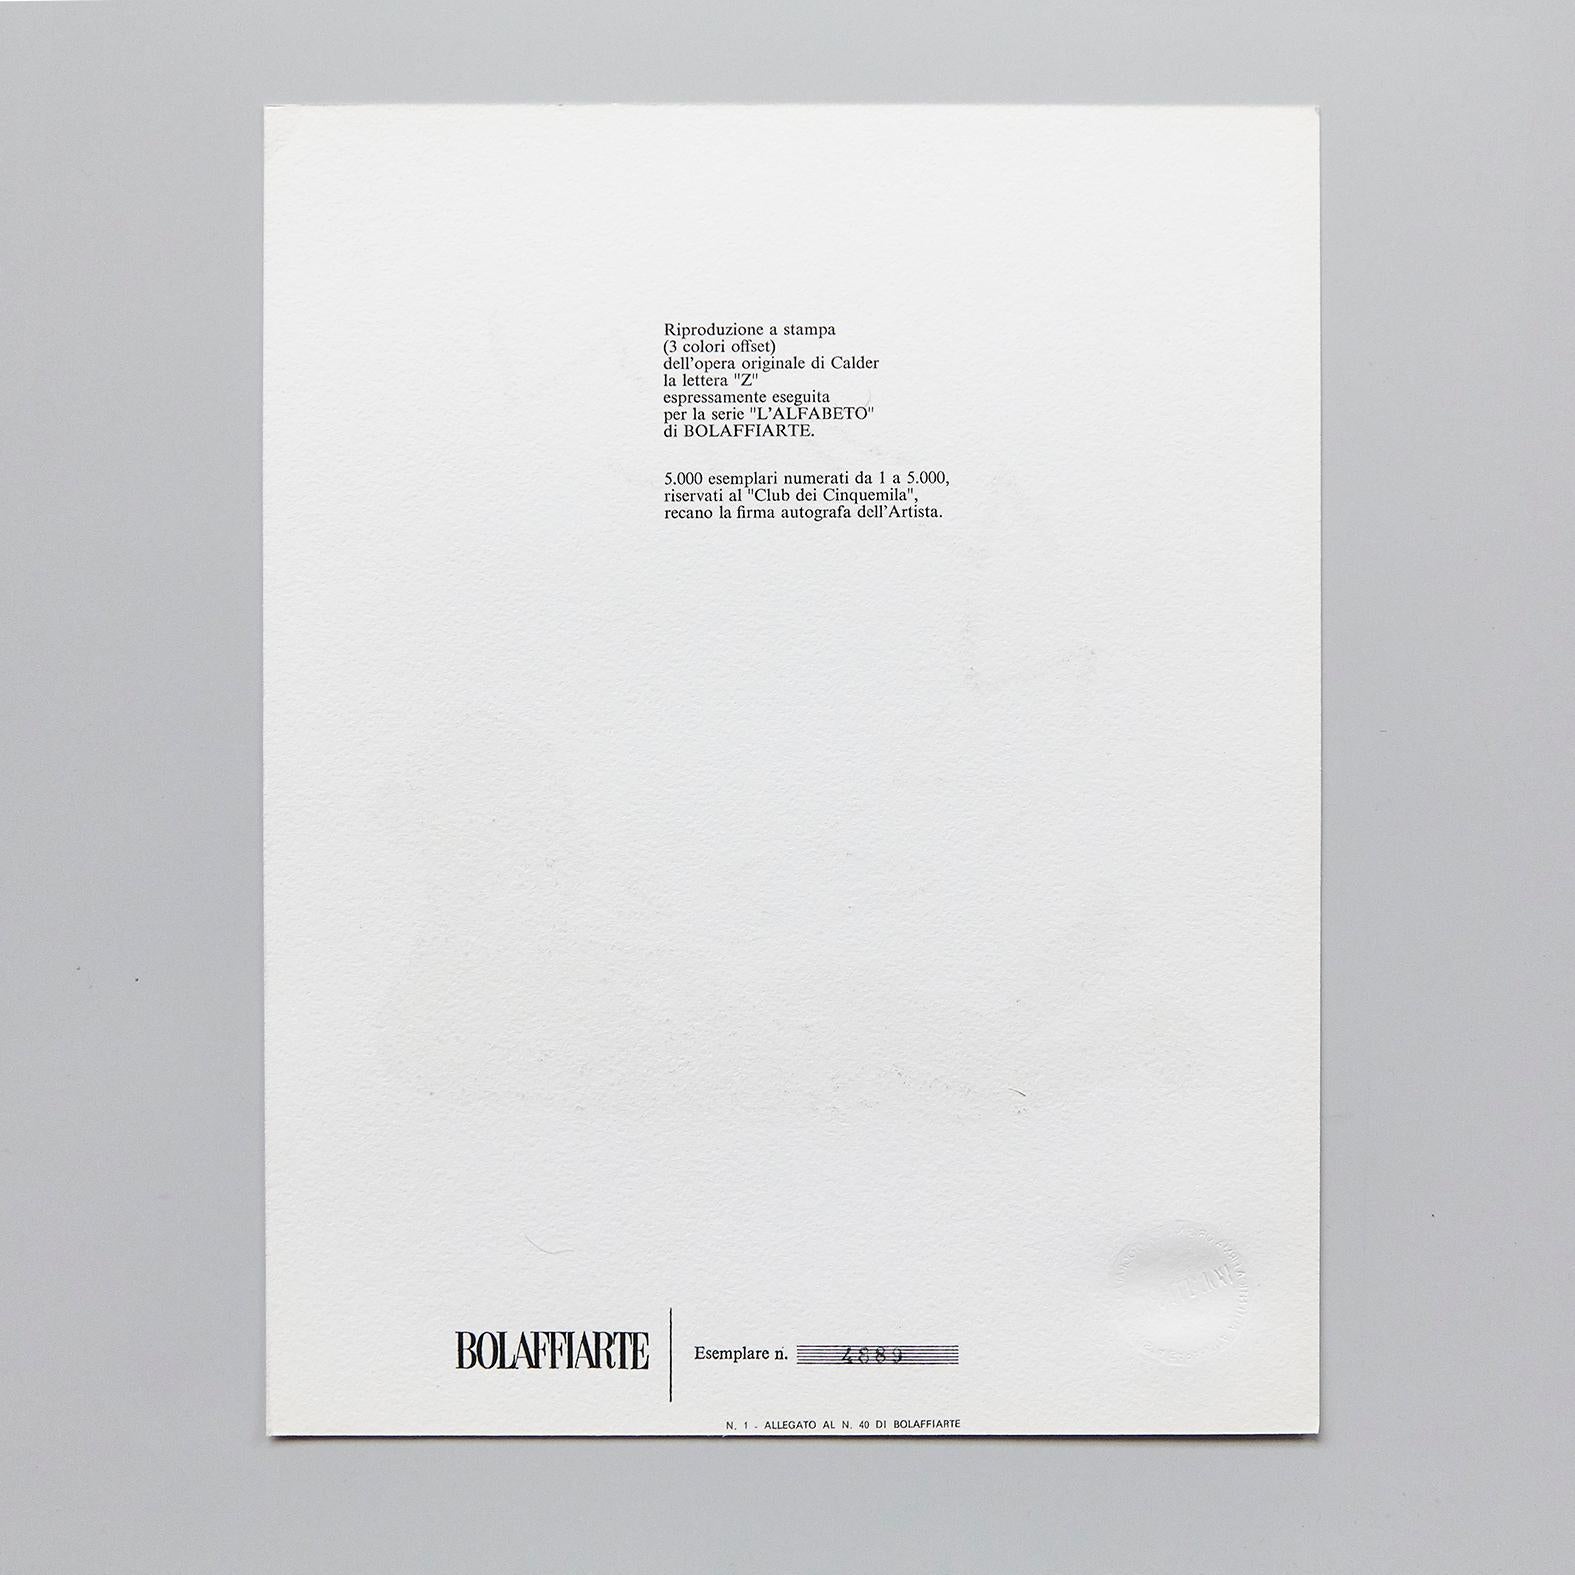 Paper Alexander Calder, Lithography, 1979